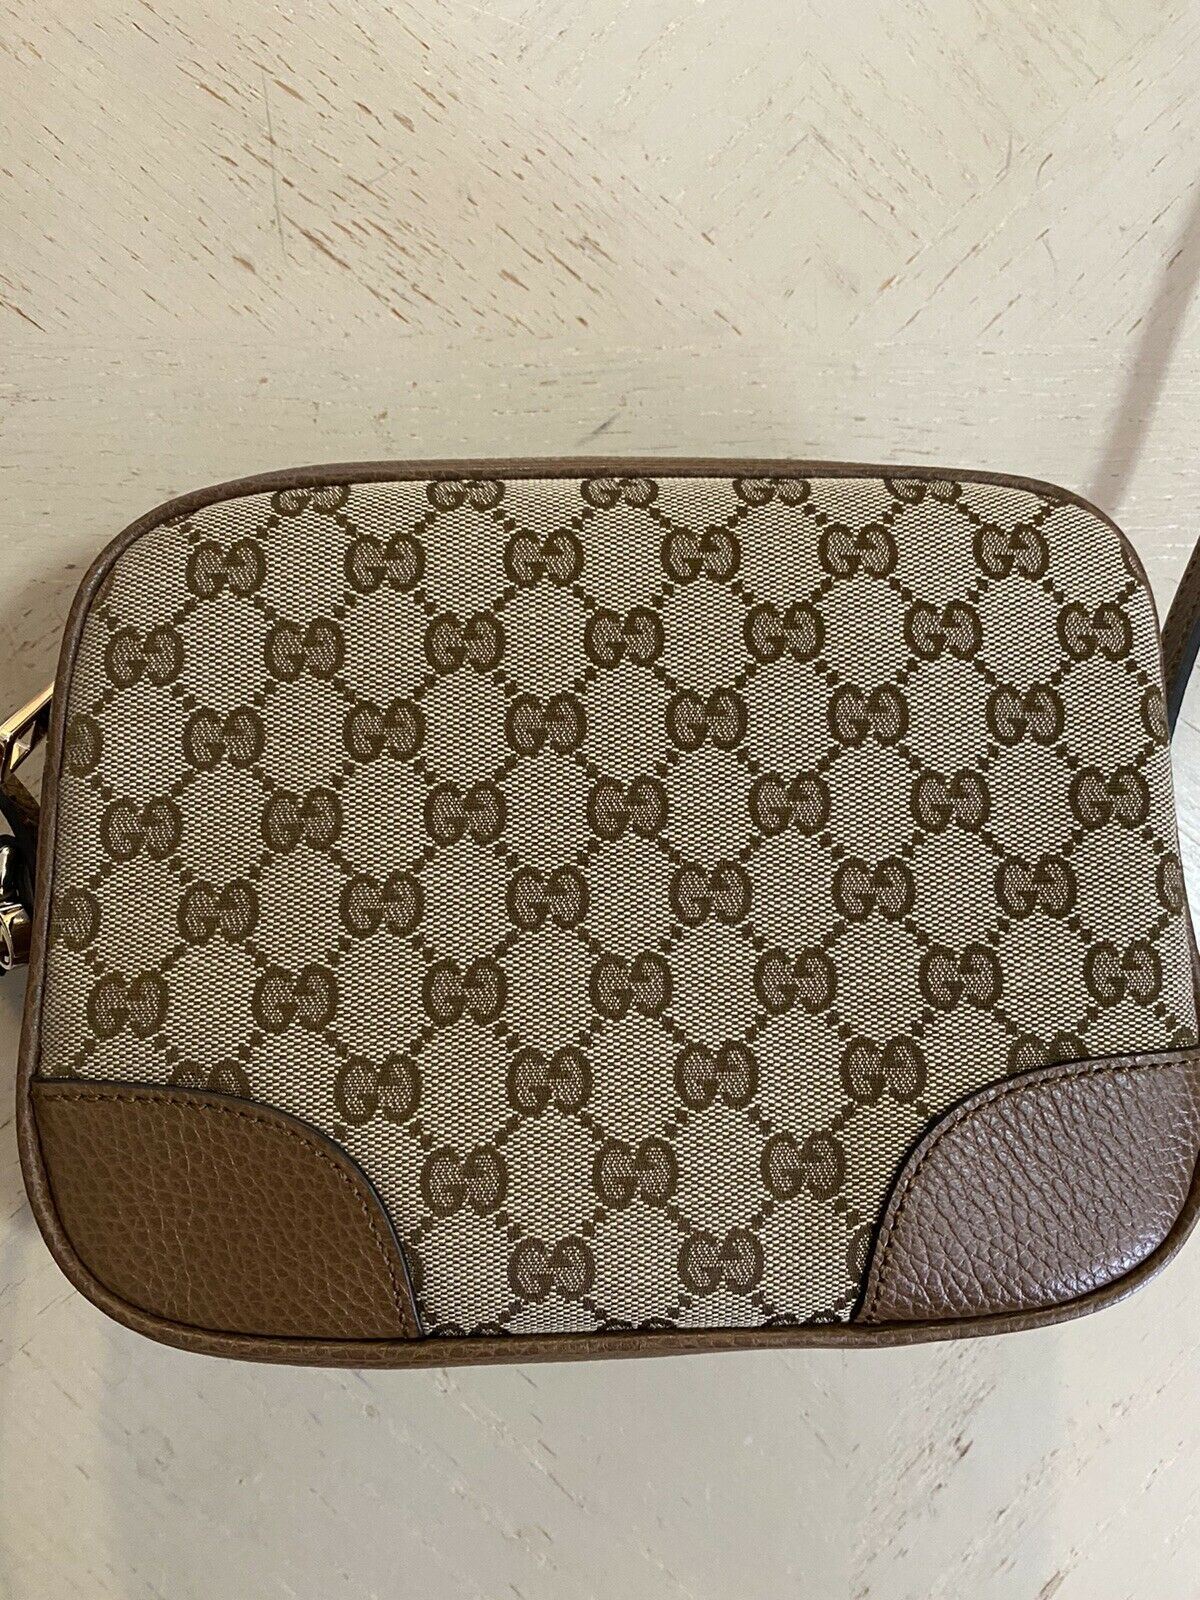 New Gucci Bree Guccisima GG Leather/Canvas Crossbody Shoulder Bag Beige/ 449413